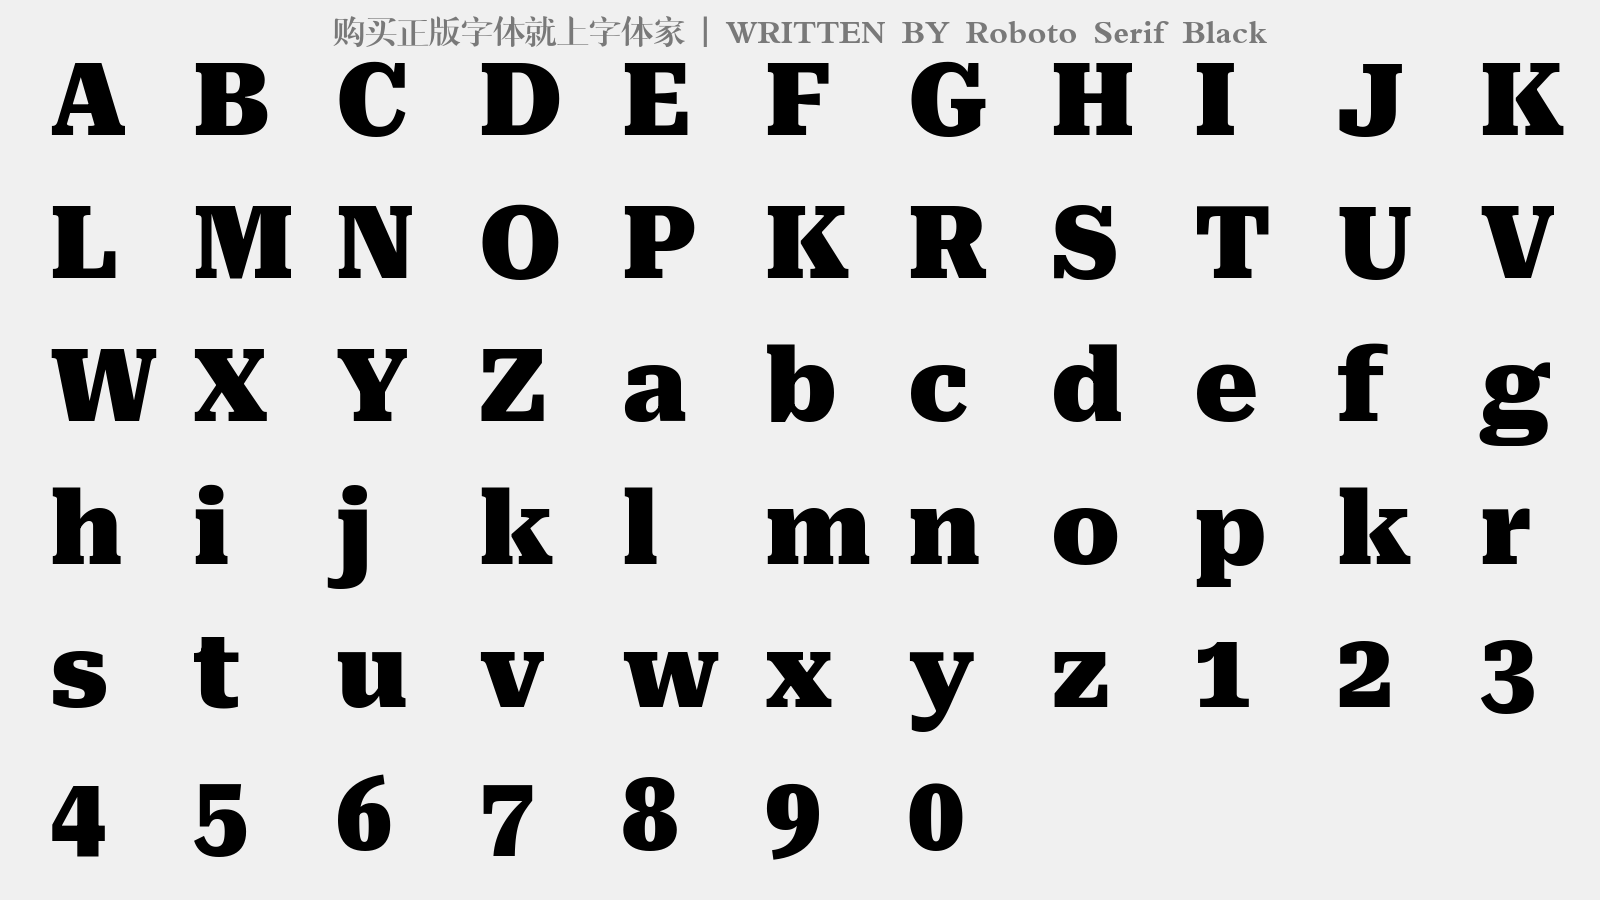 Roboto Serif Black - 大写字母/小写字母/数字